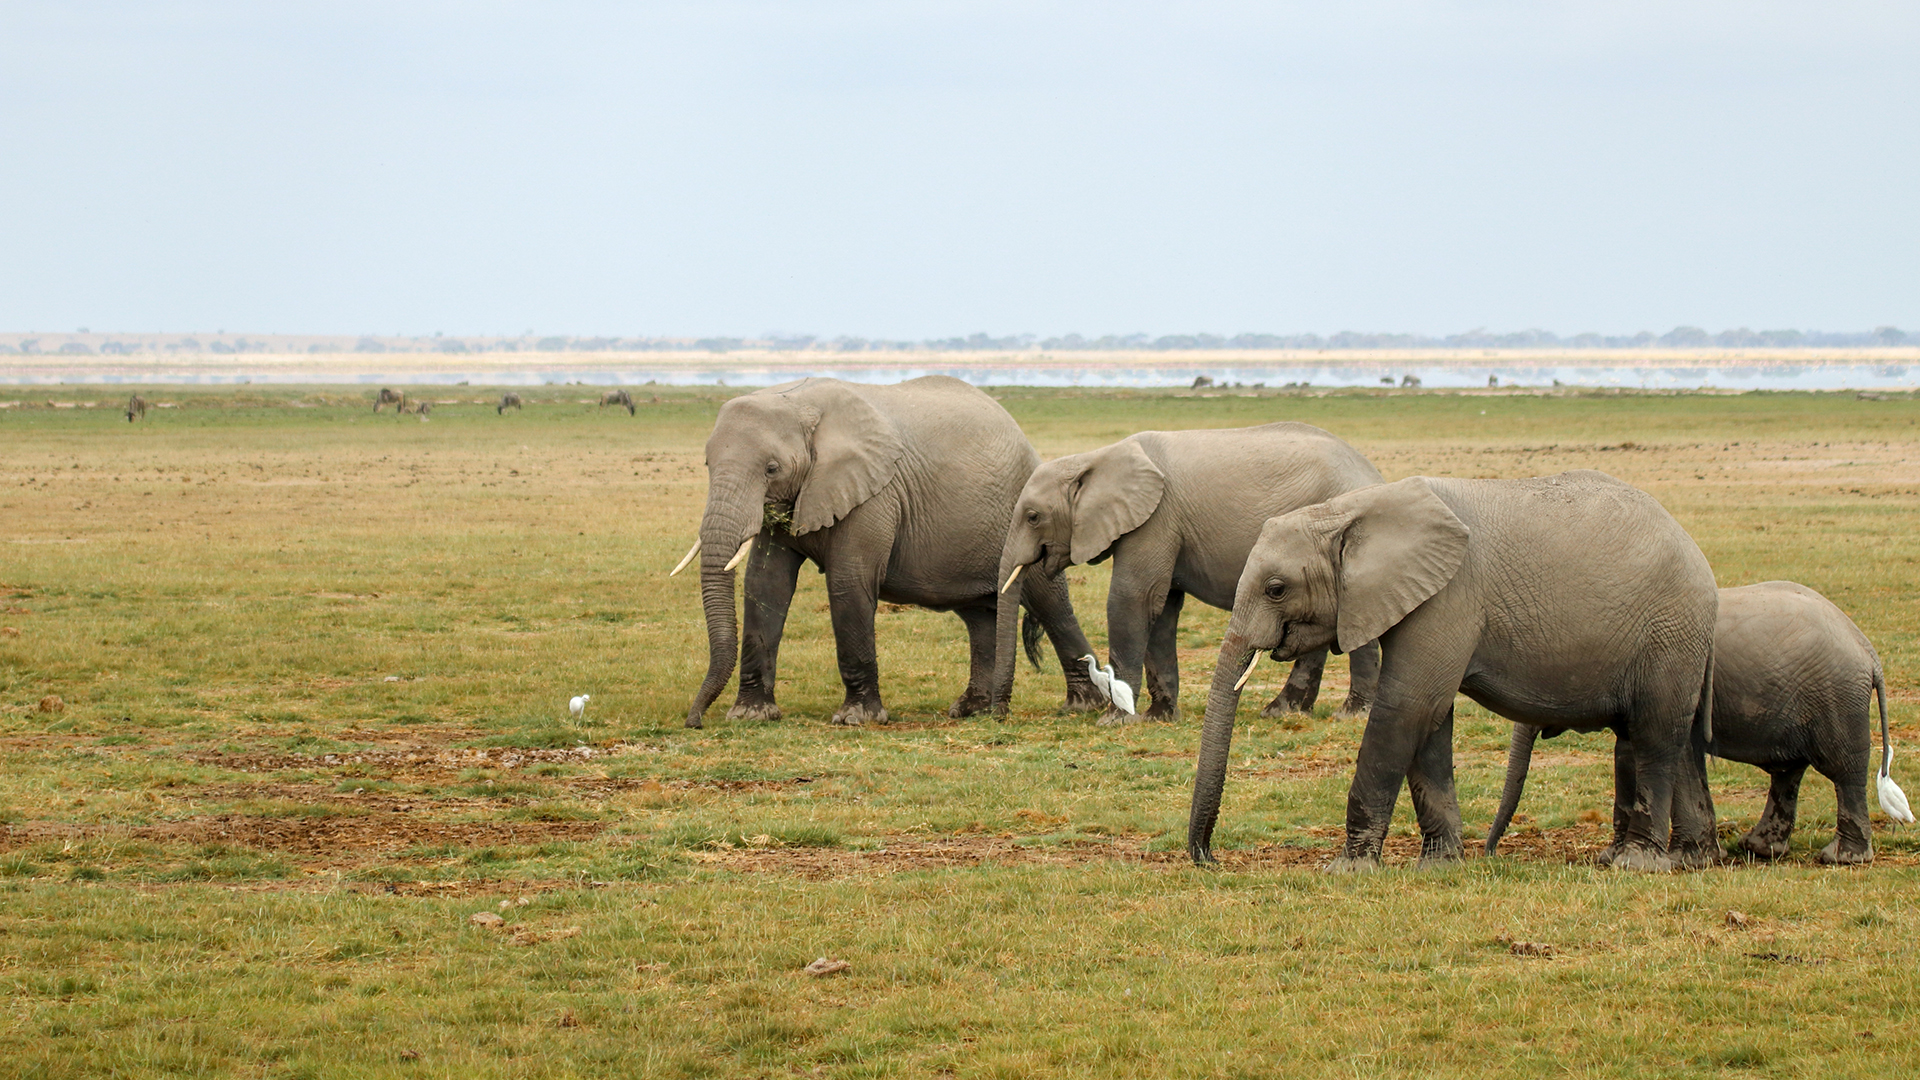 Three adult elephants and one young elephant walking across a grassy landscape in Amboseli, Kenya